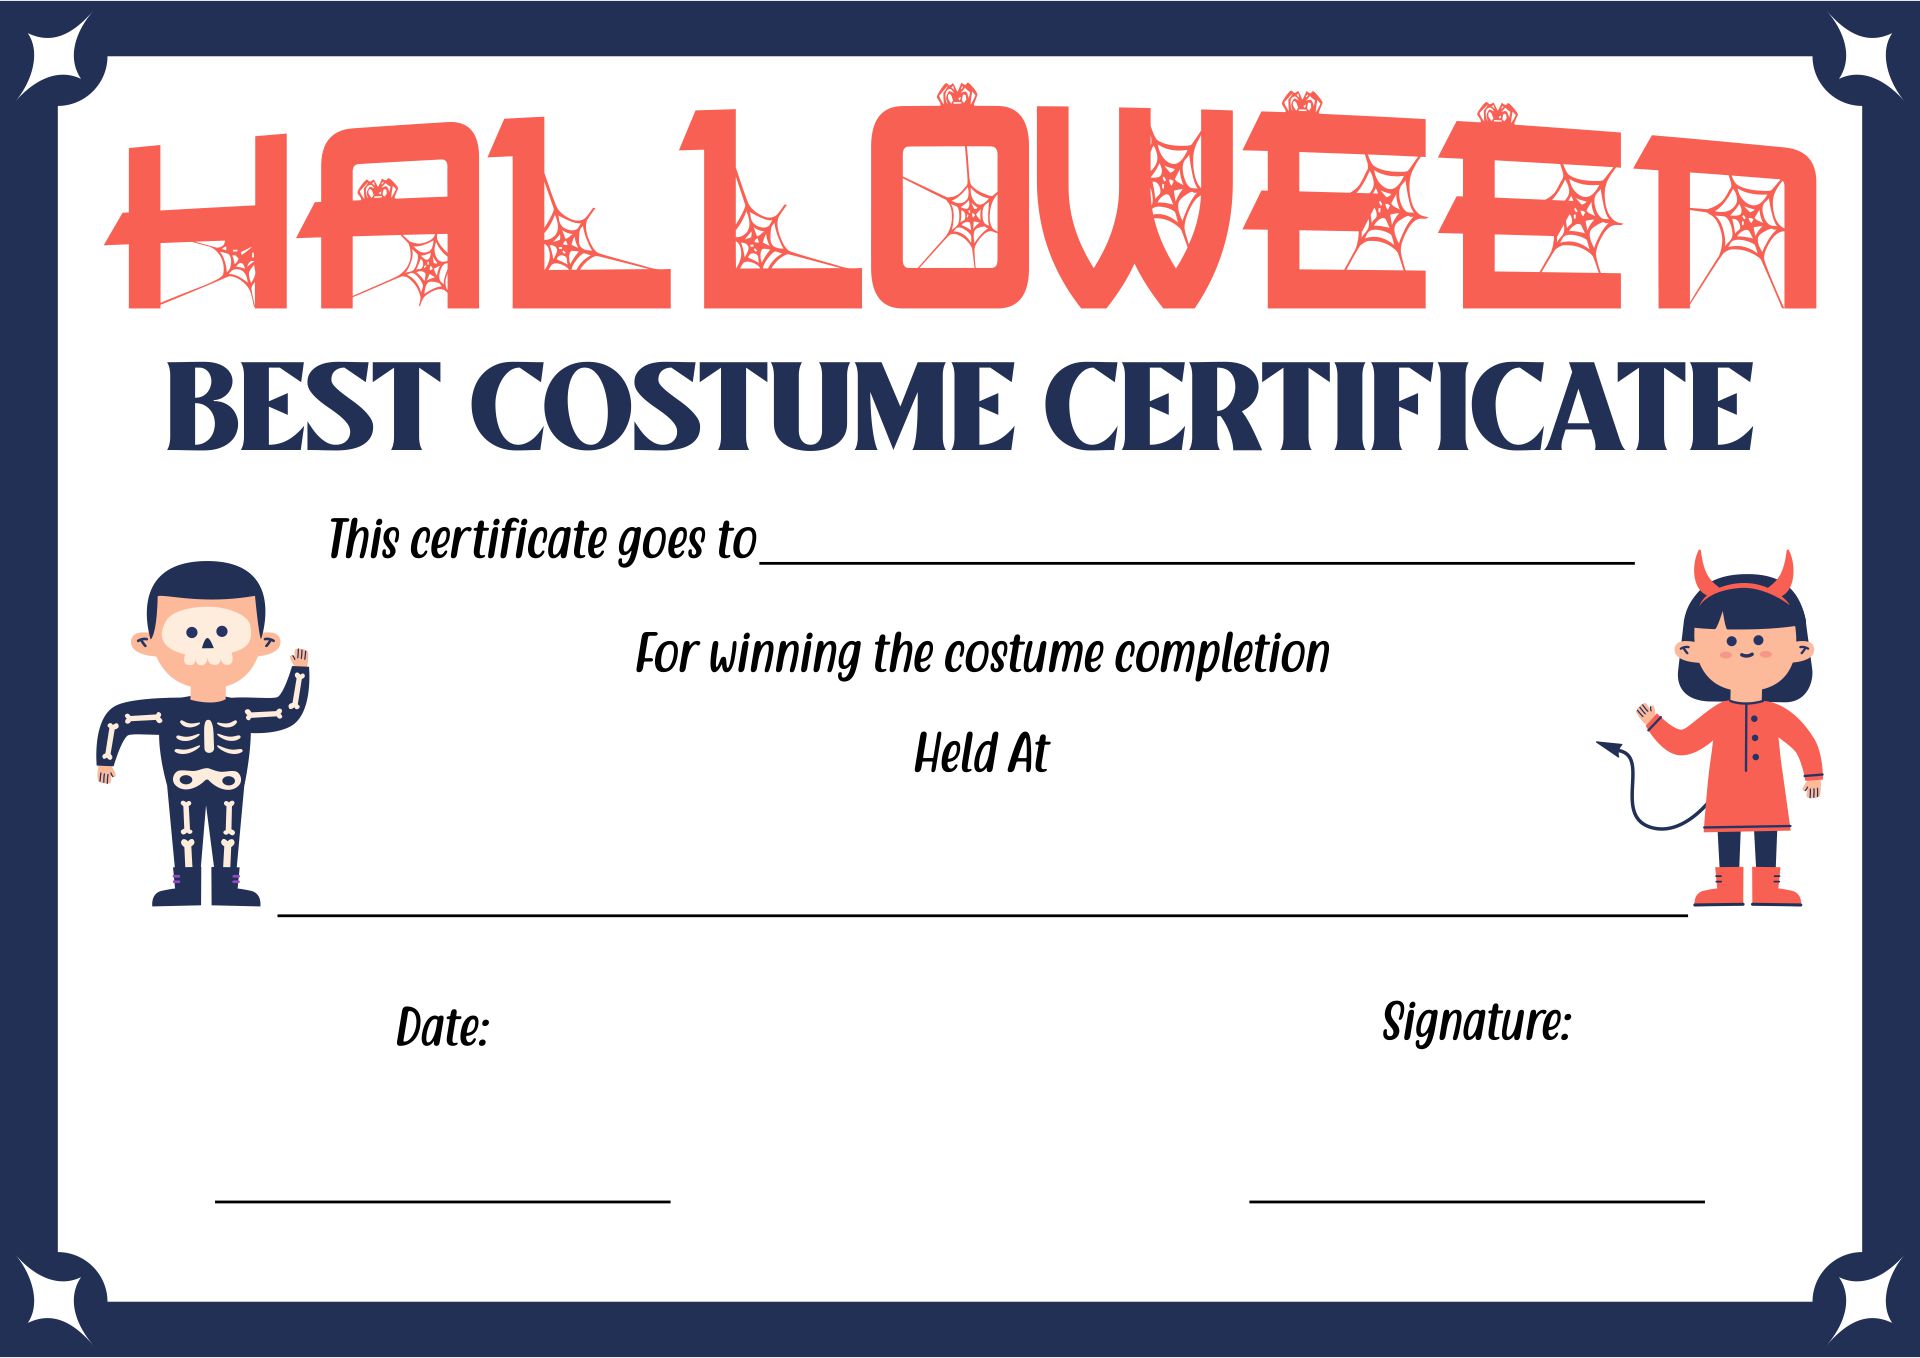 15 Best Halloween Costume Certificates Printable - printablee.com